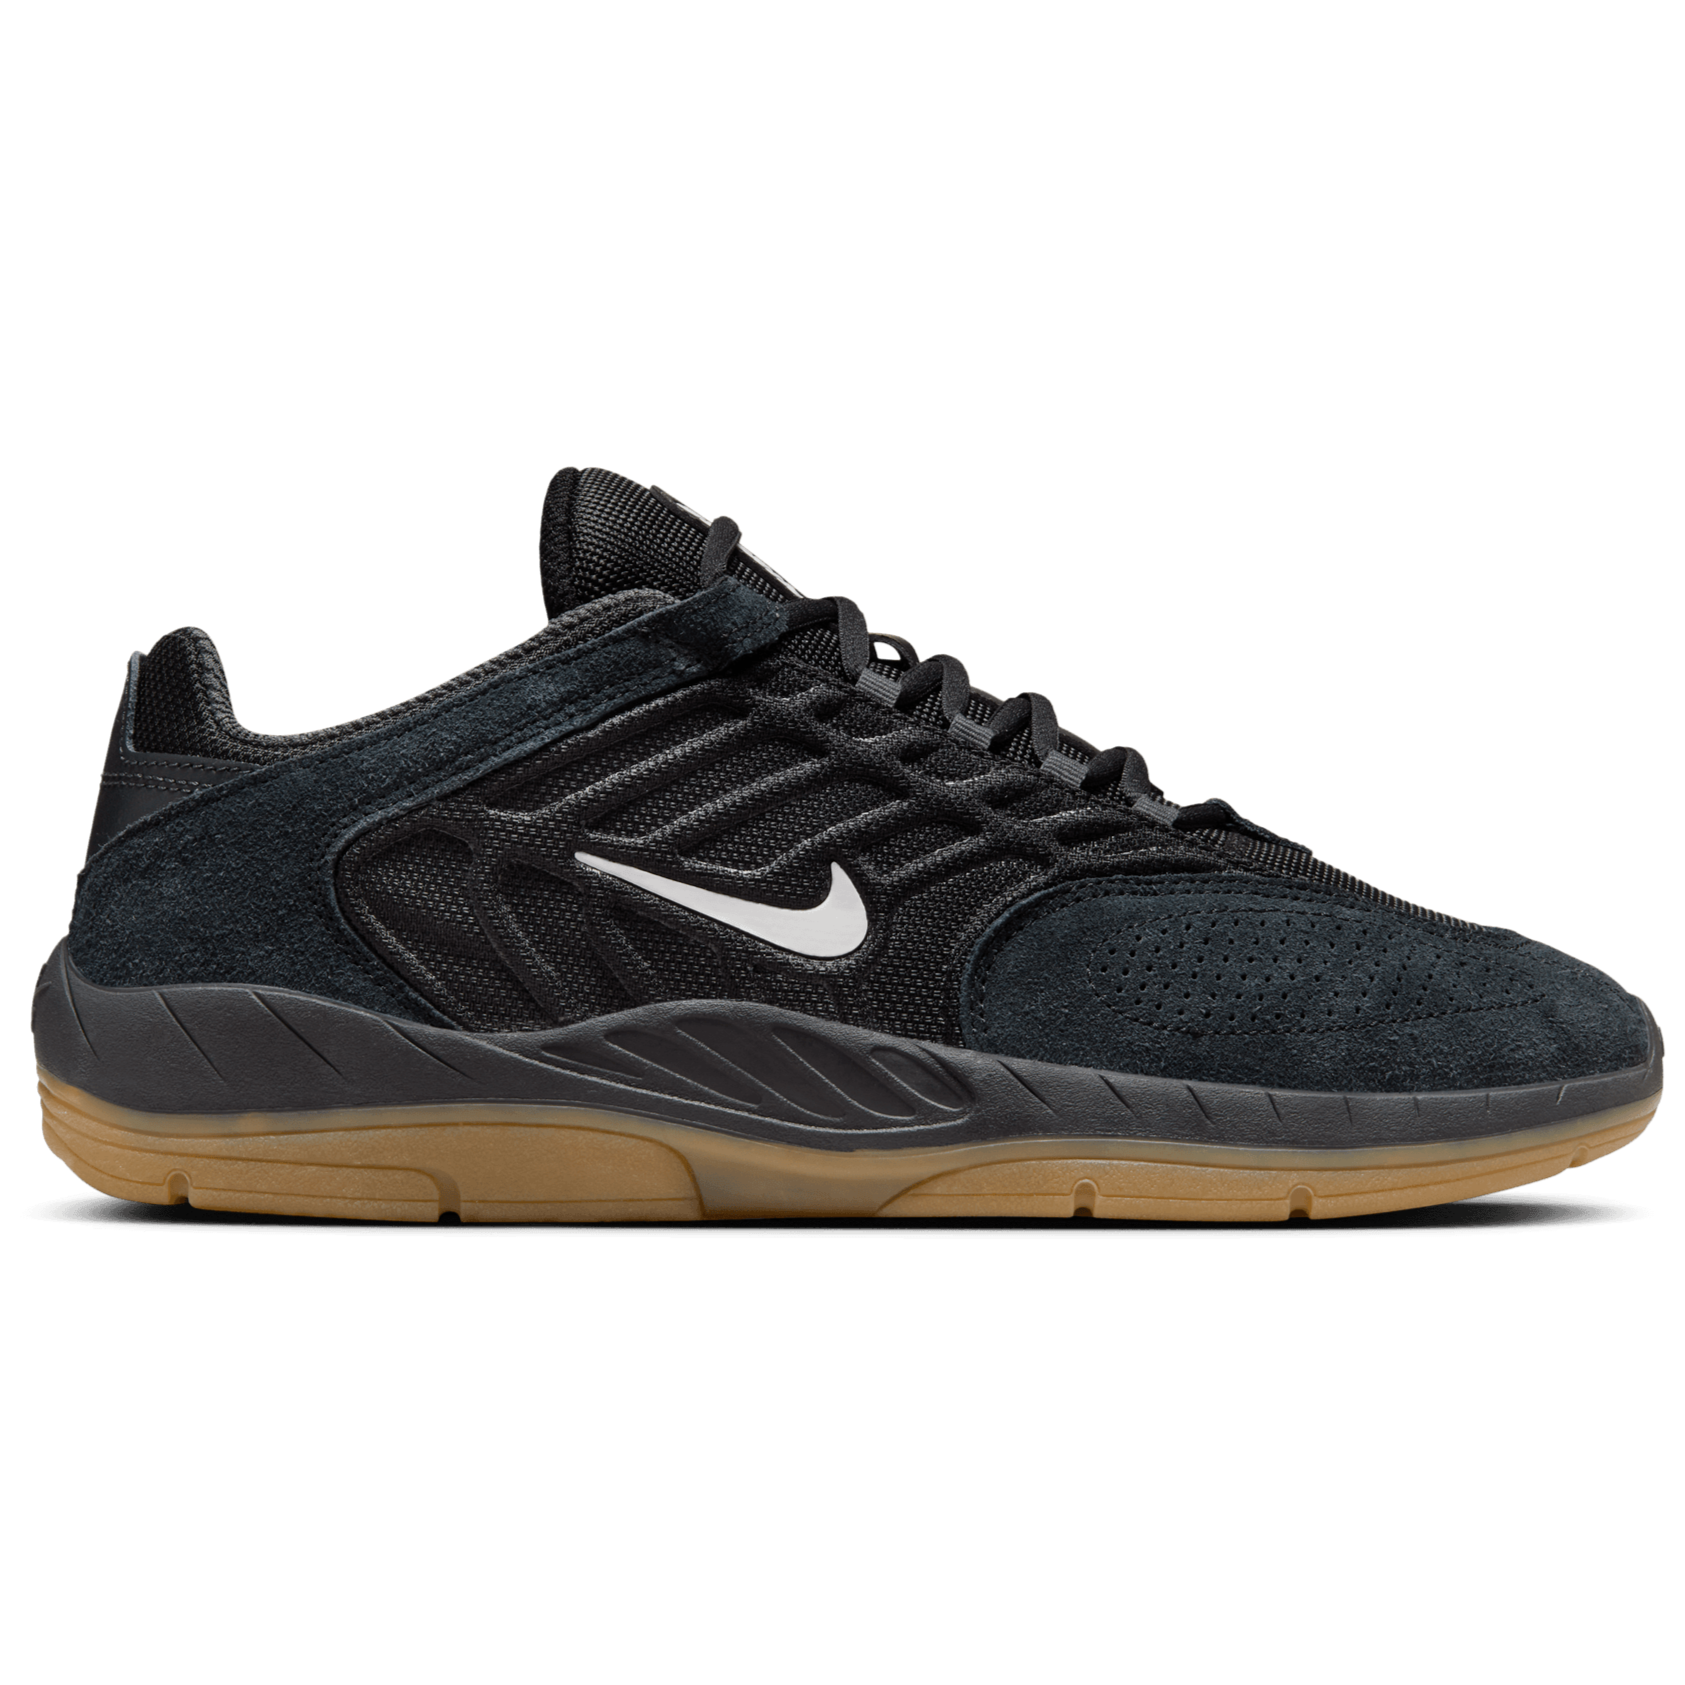 Black/Gum Vertebrae Nike SB Skate Shoe